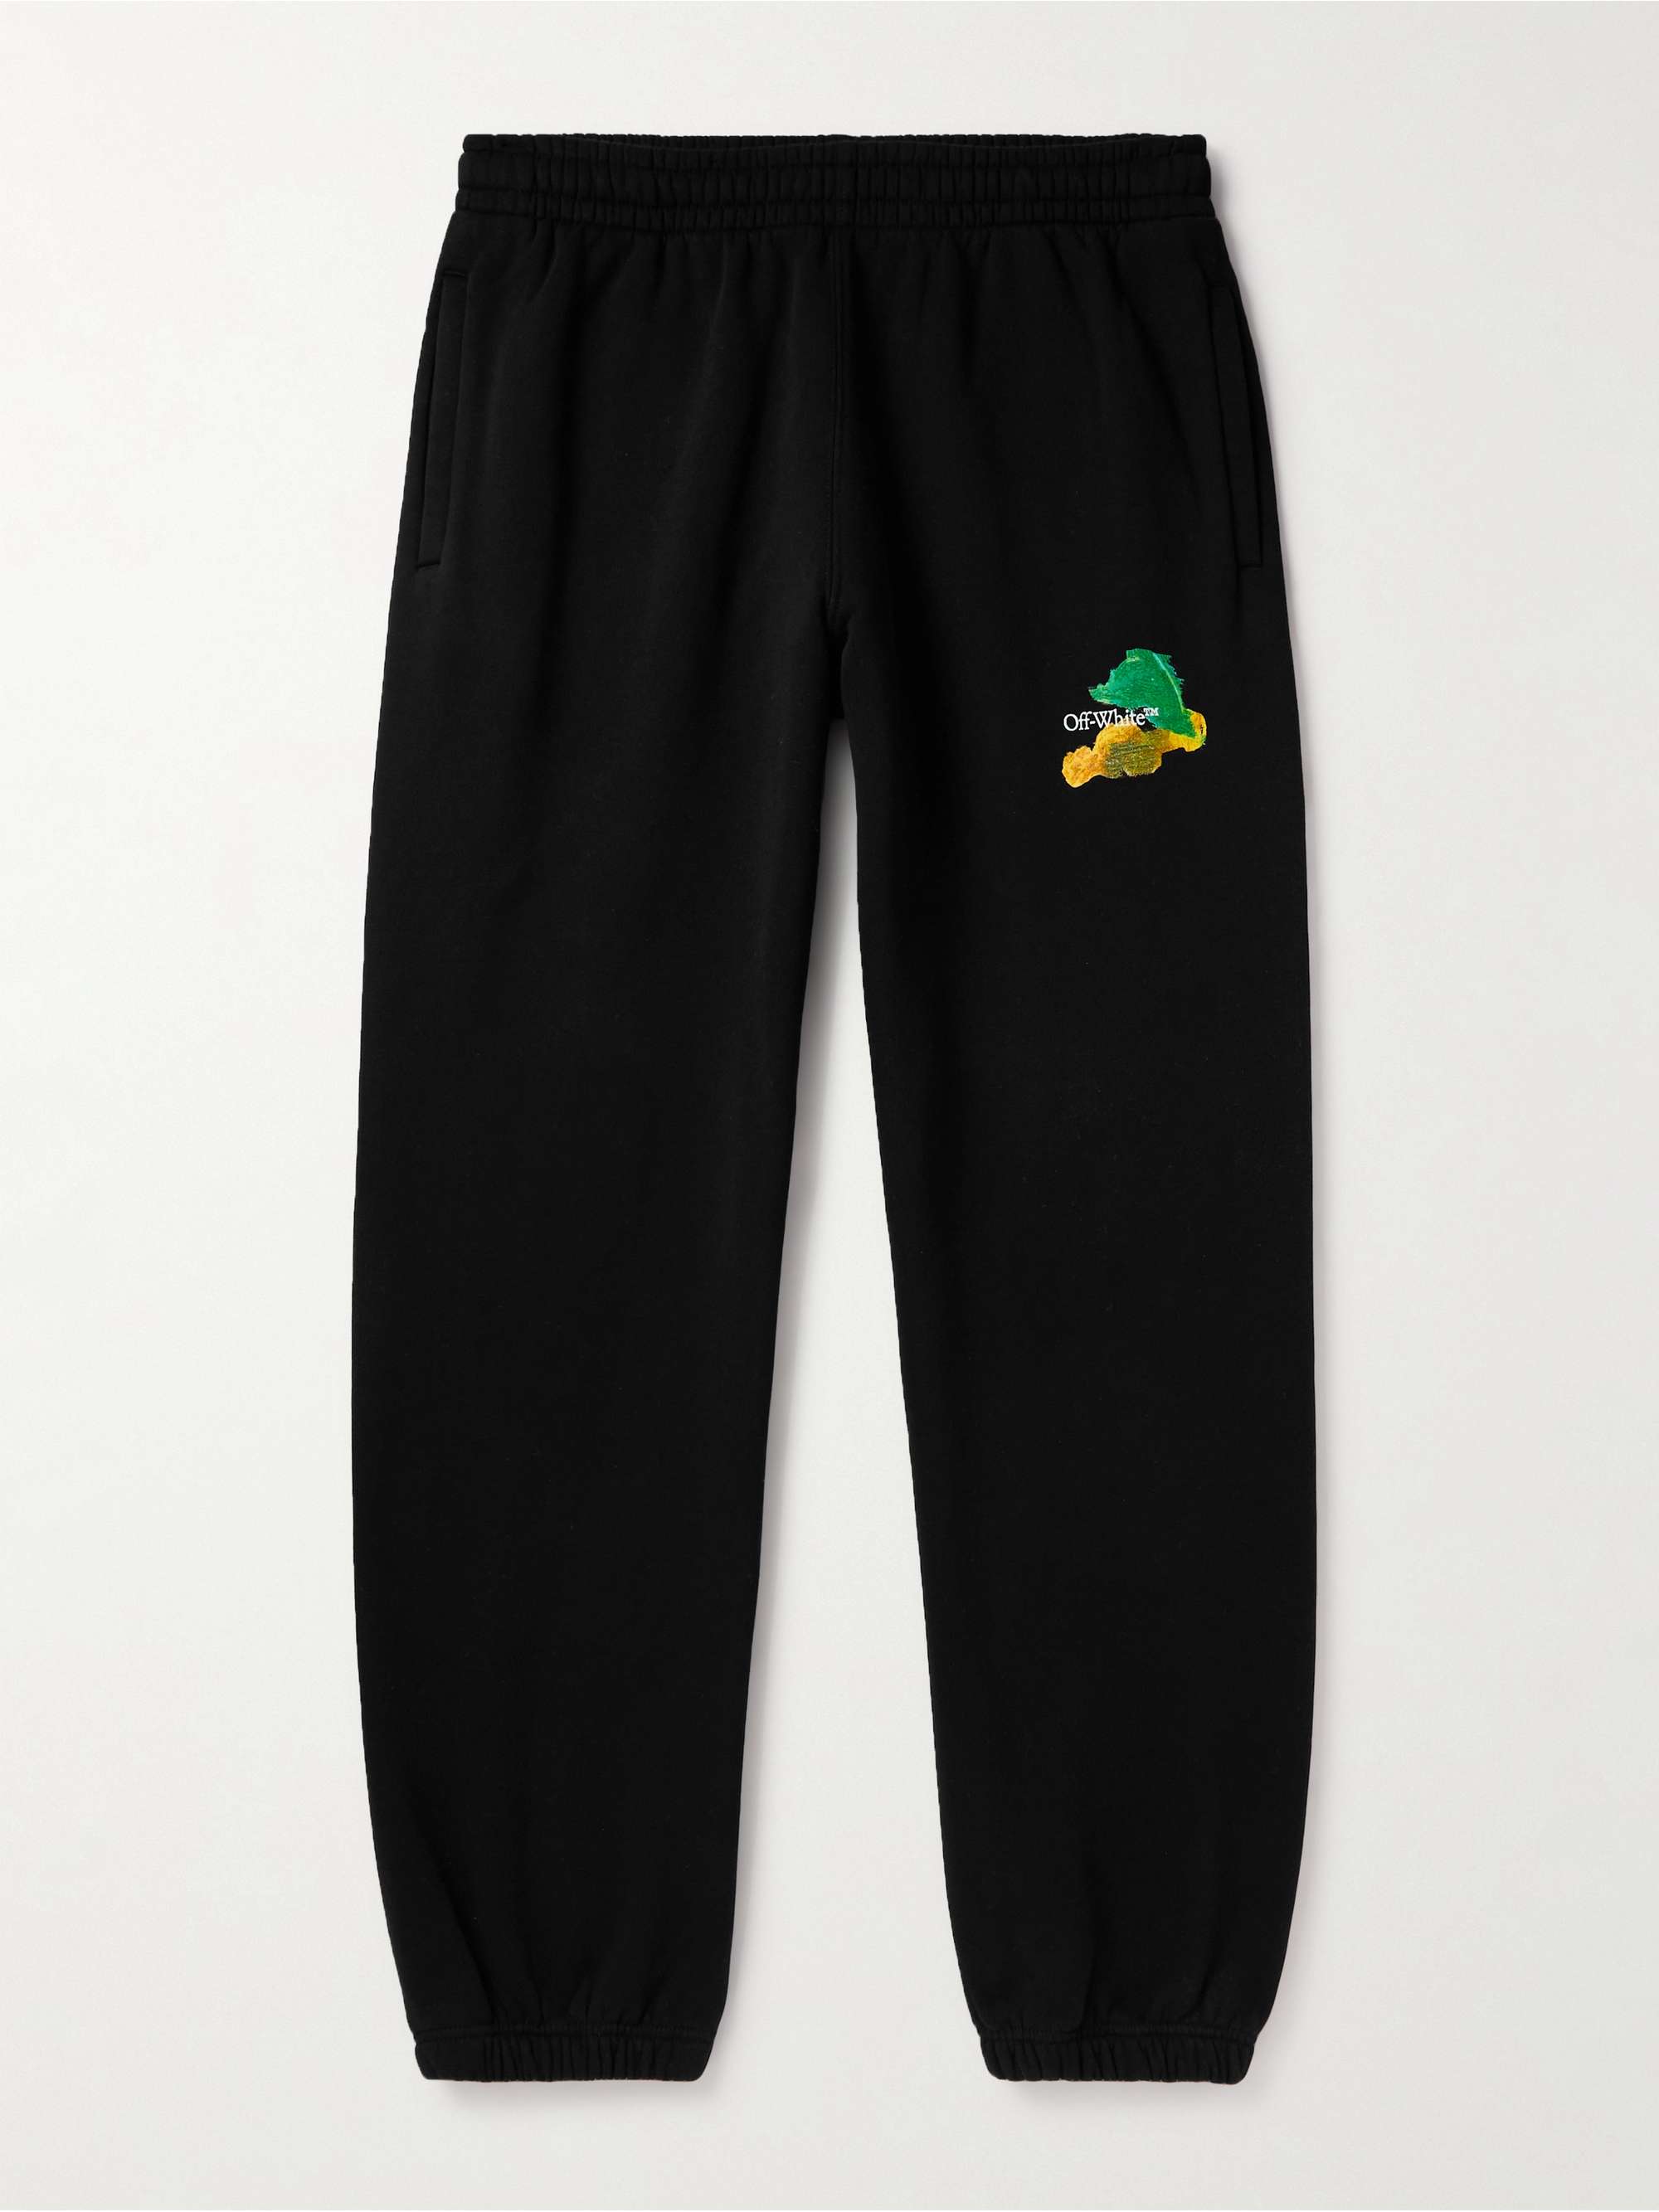 OFF-WHITE Tapered Logo-Print Cotton-Jersey Sweatpants,Black